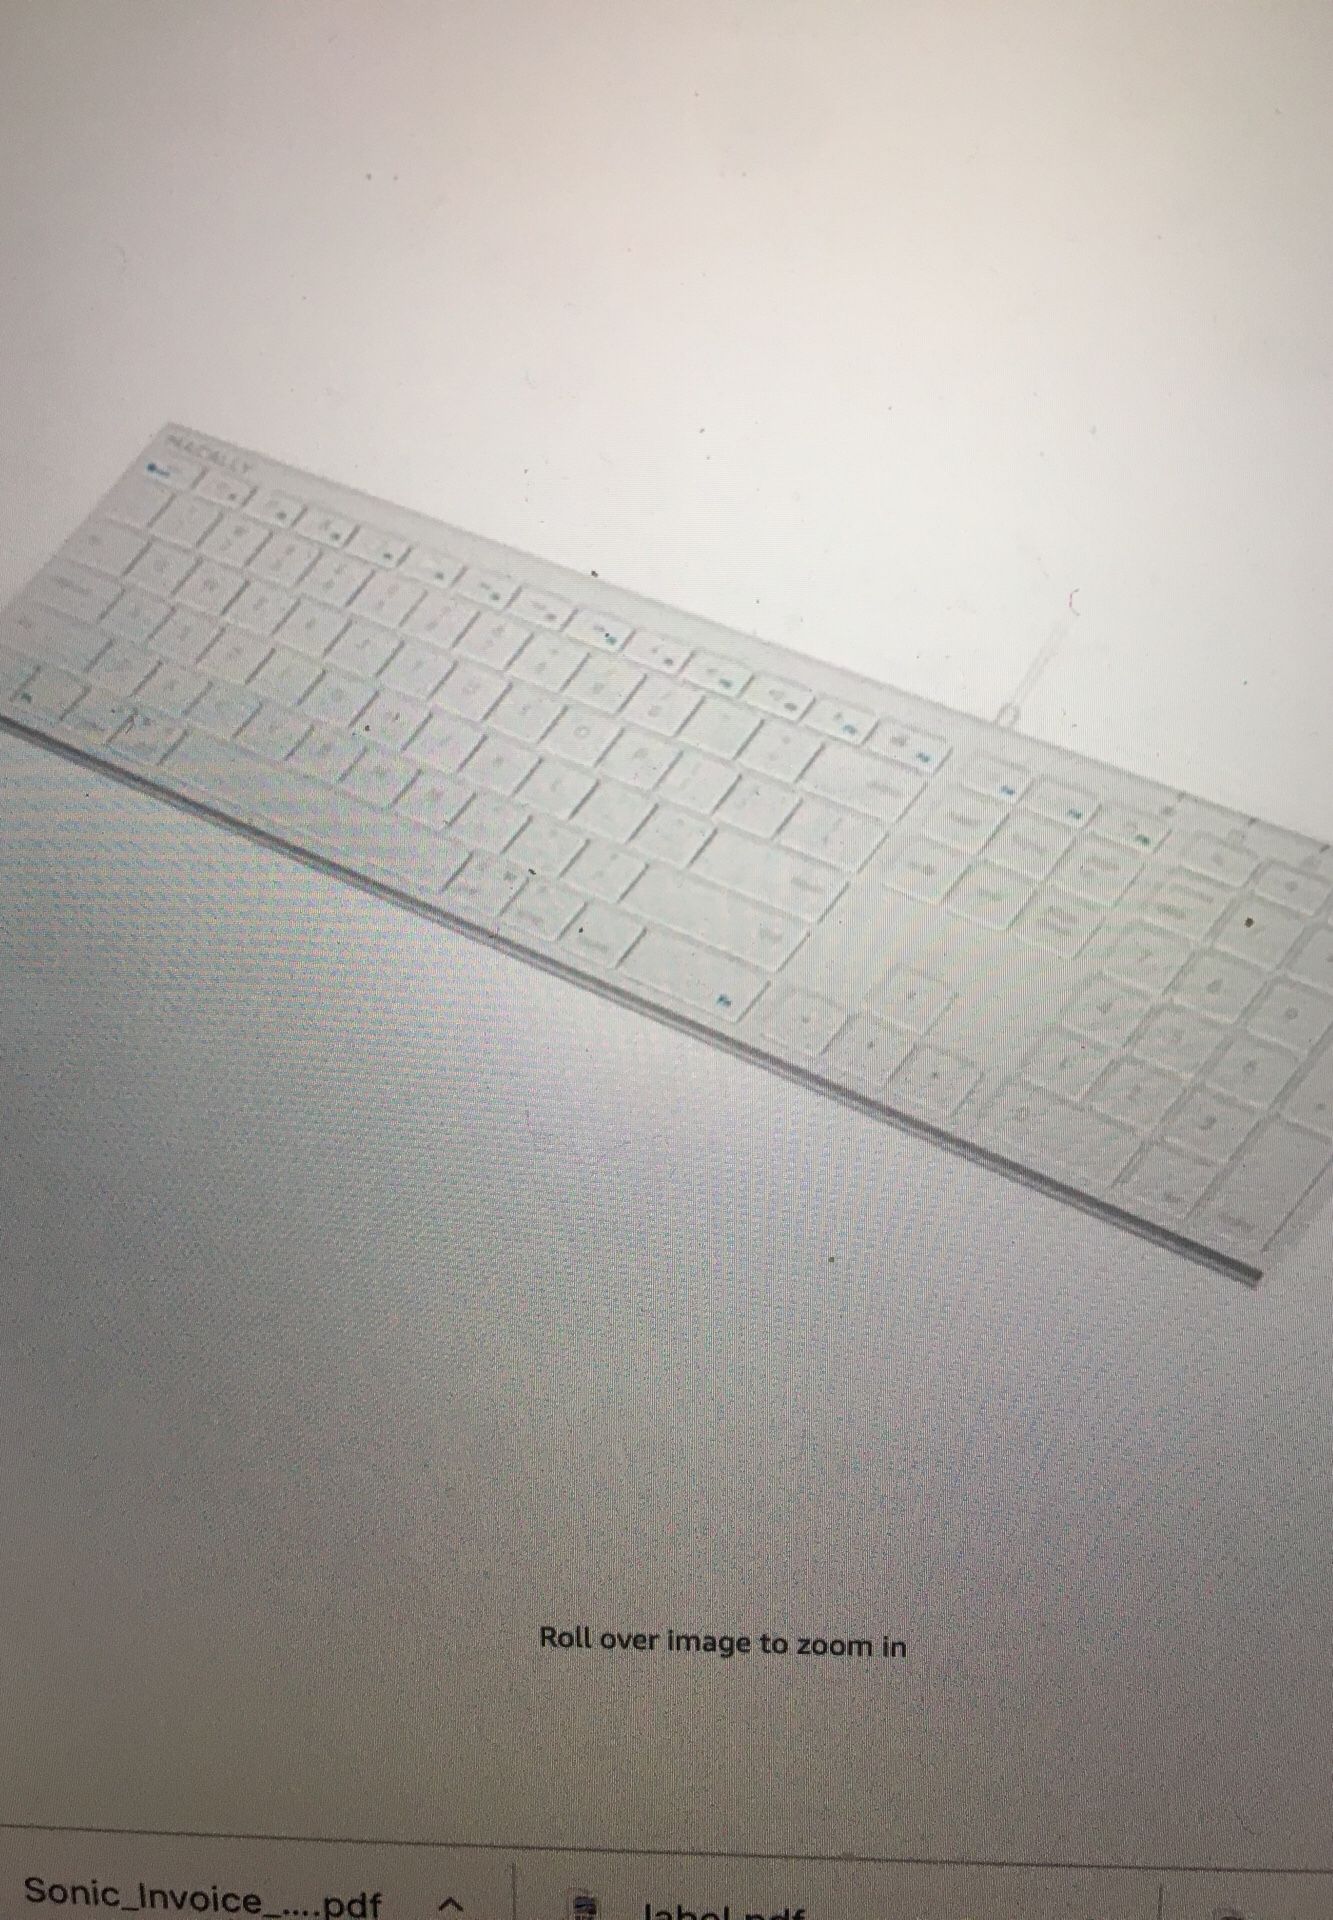 Macally Ultra-Slim USB Wired Computer Keyboard for Apple Mac Pro, MacBook Pro/Air, iMac, Mac Mini, Laptop, Windows PC Laptop (ACEKEY)